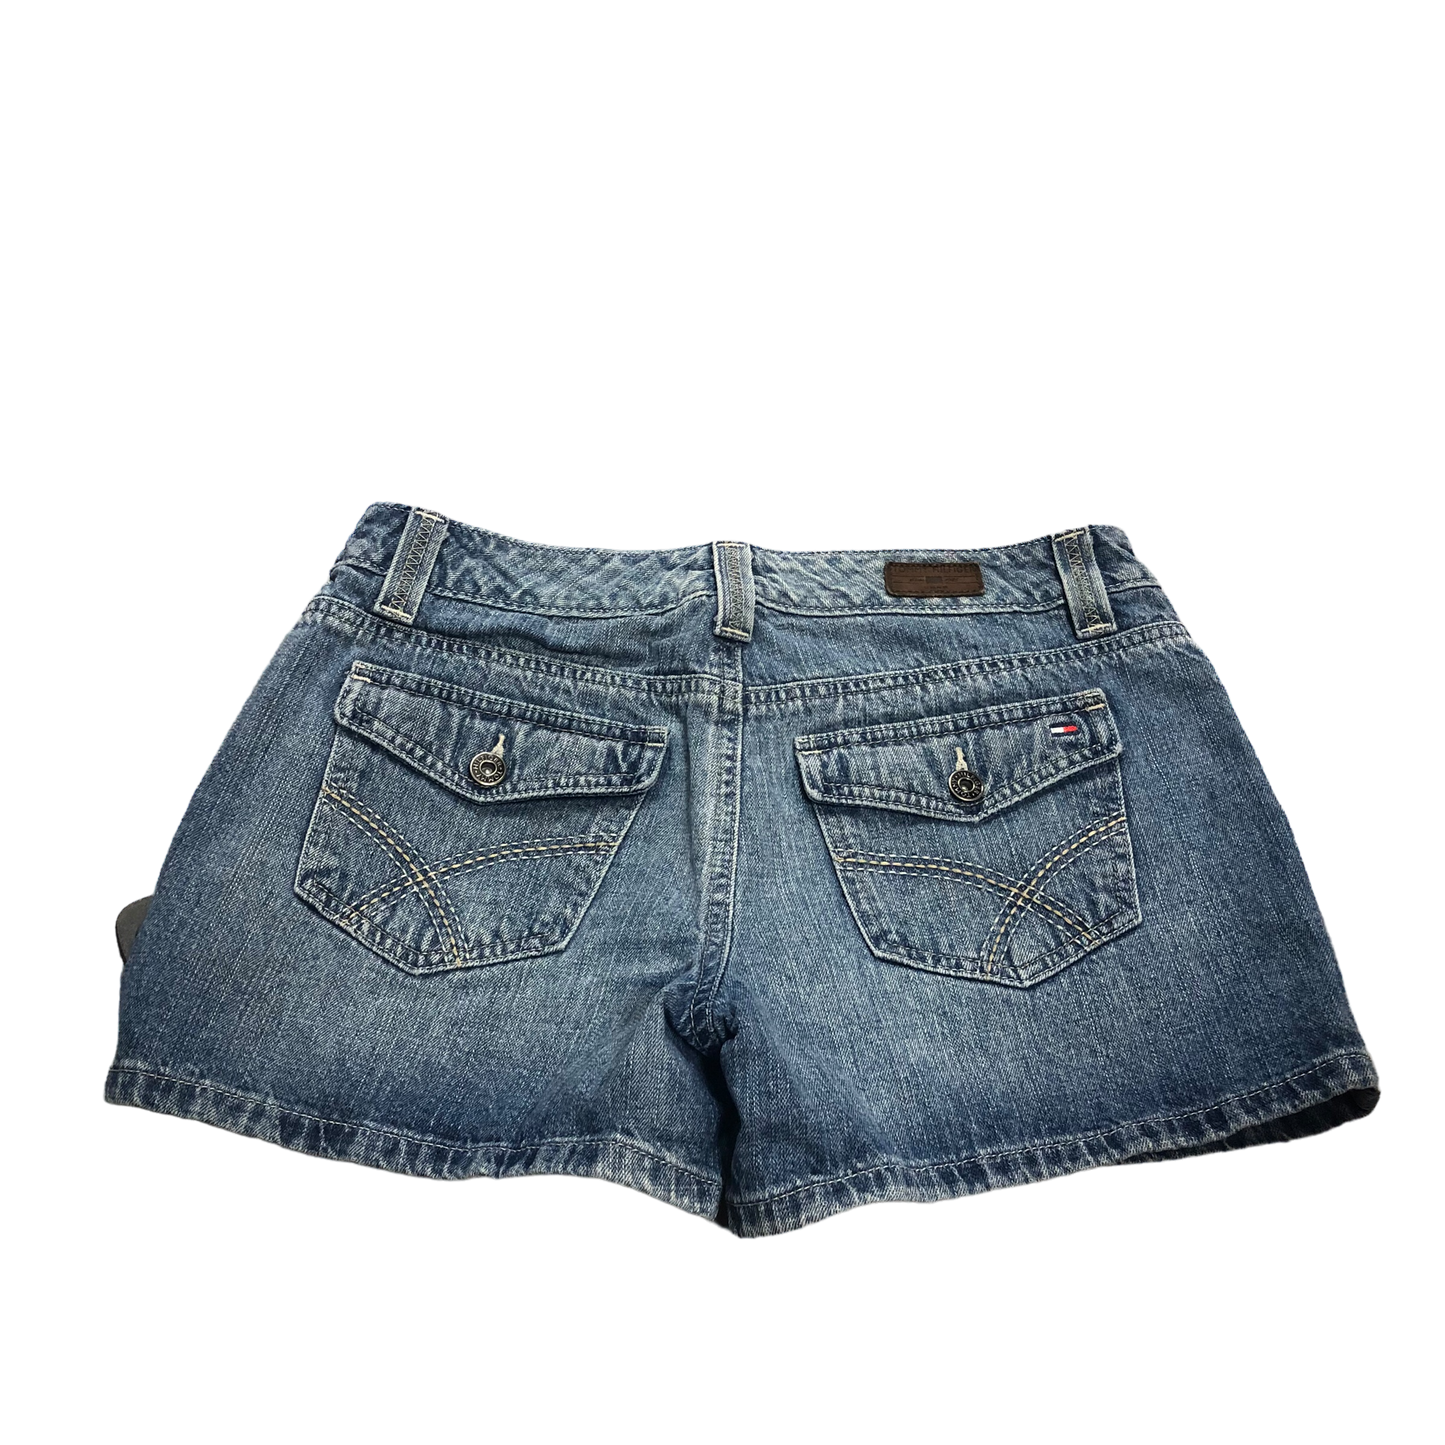 Blue Denim Shorts Tommy Hilfiger, Size 6